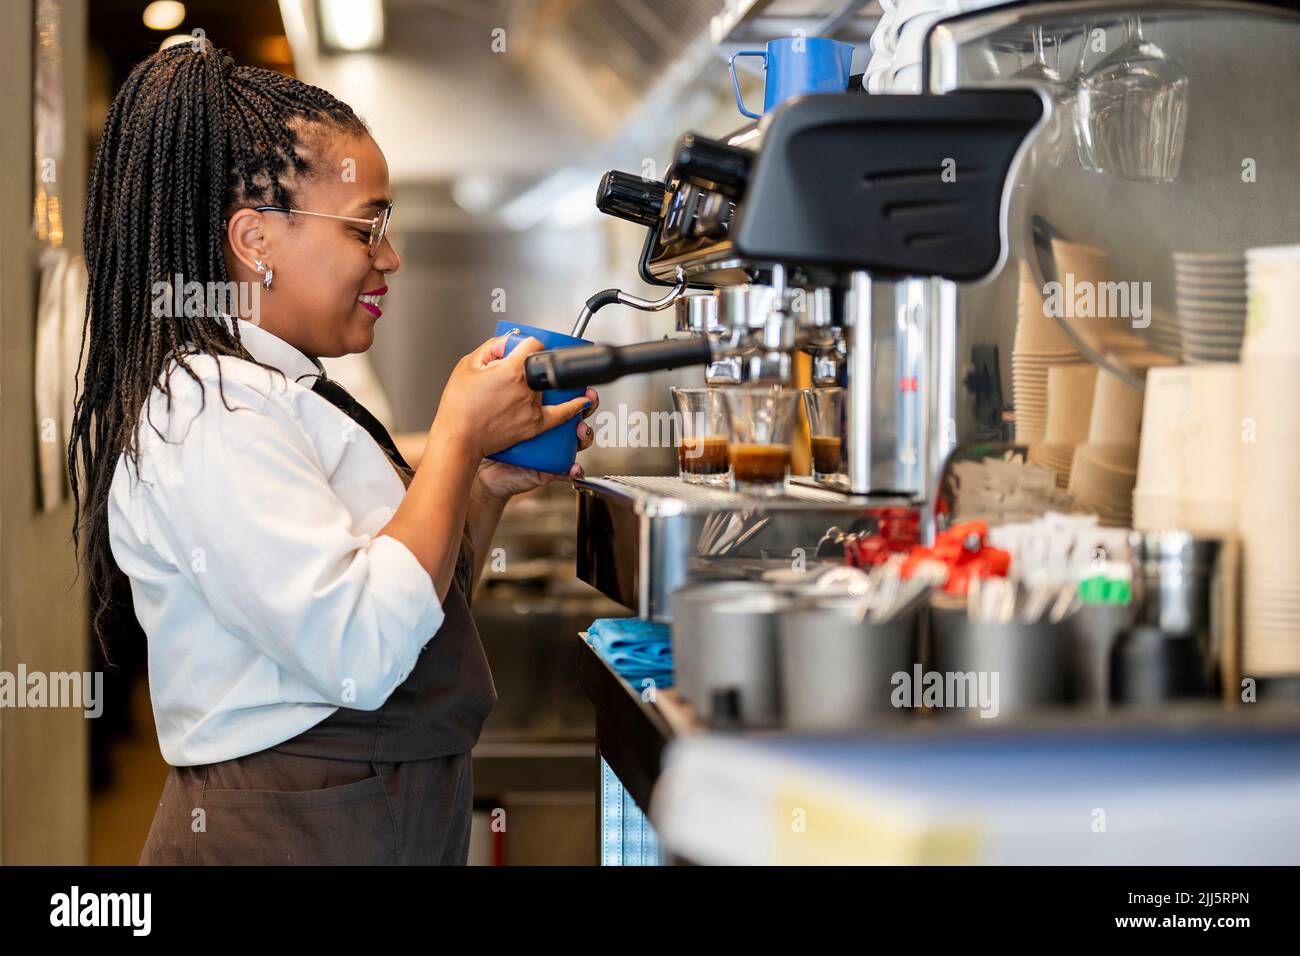 Smiling barista making coffee at restaurant kitchen Stock Photo